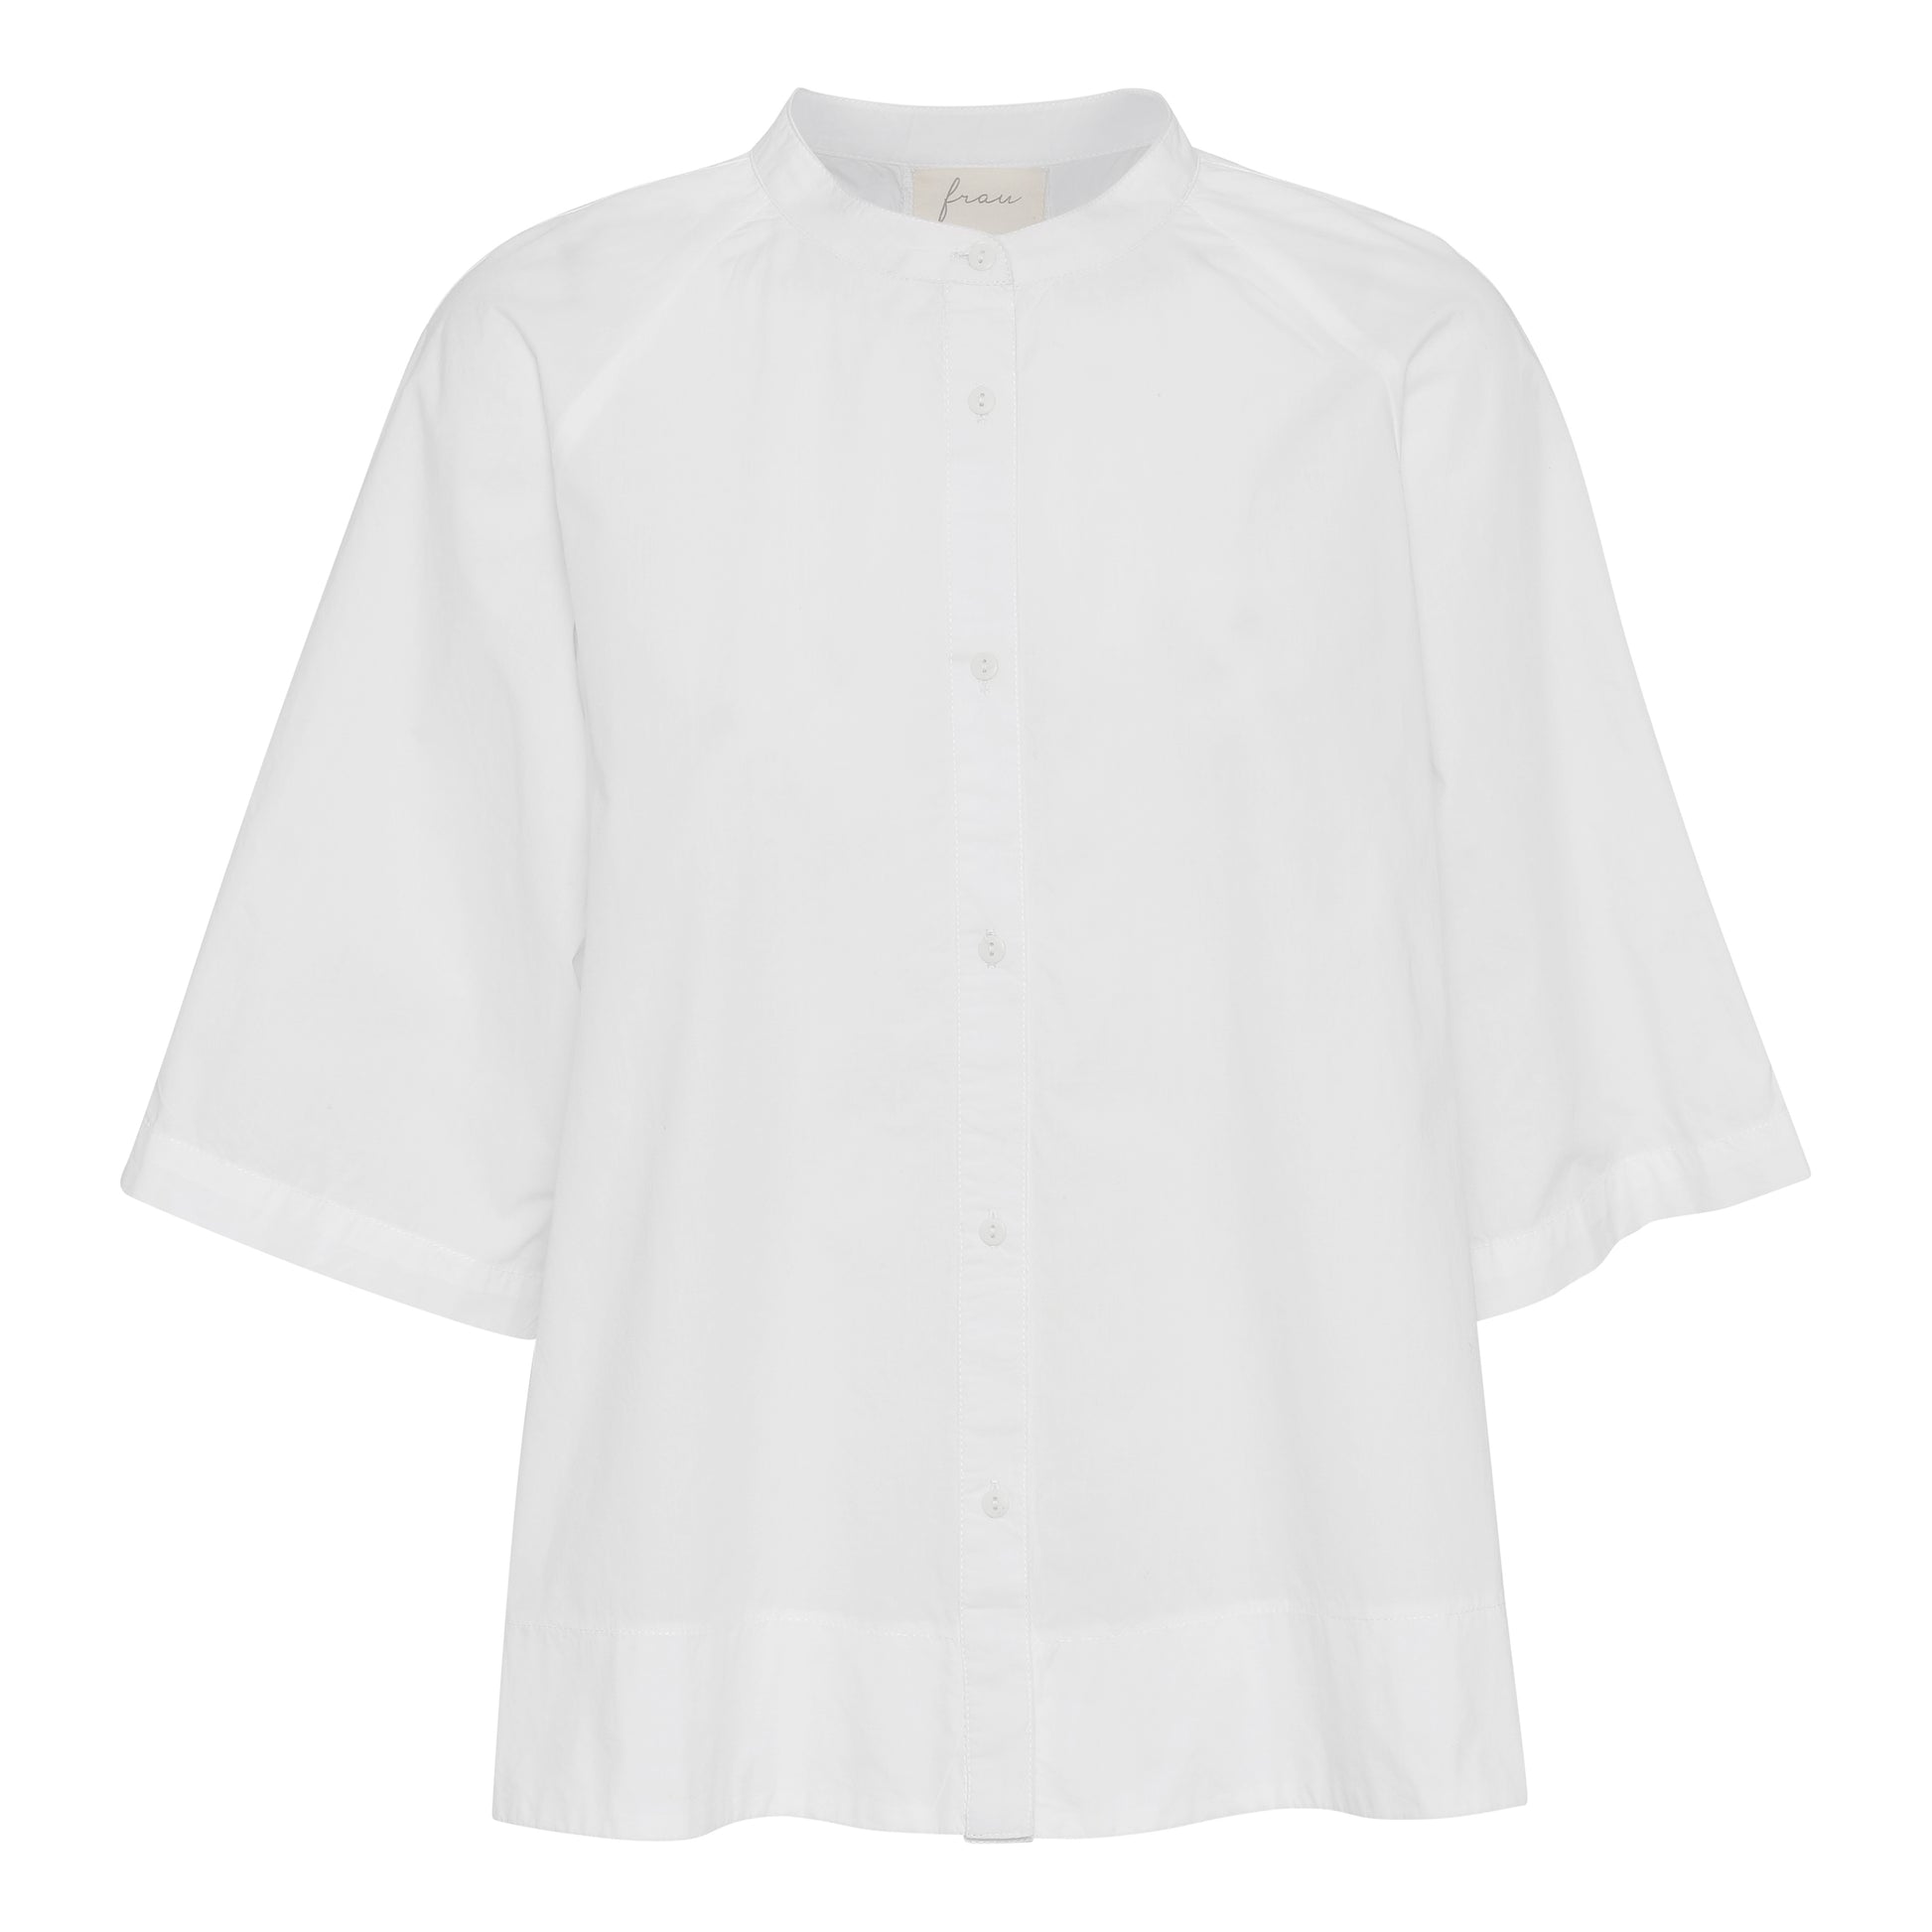 Hvid 3/4 ærmet bomuldsskjorte